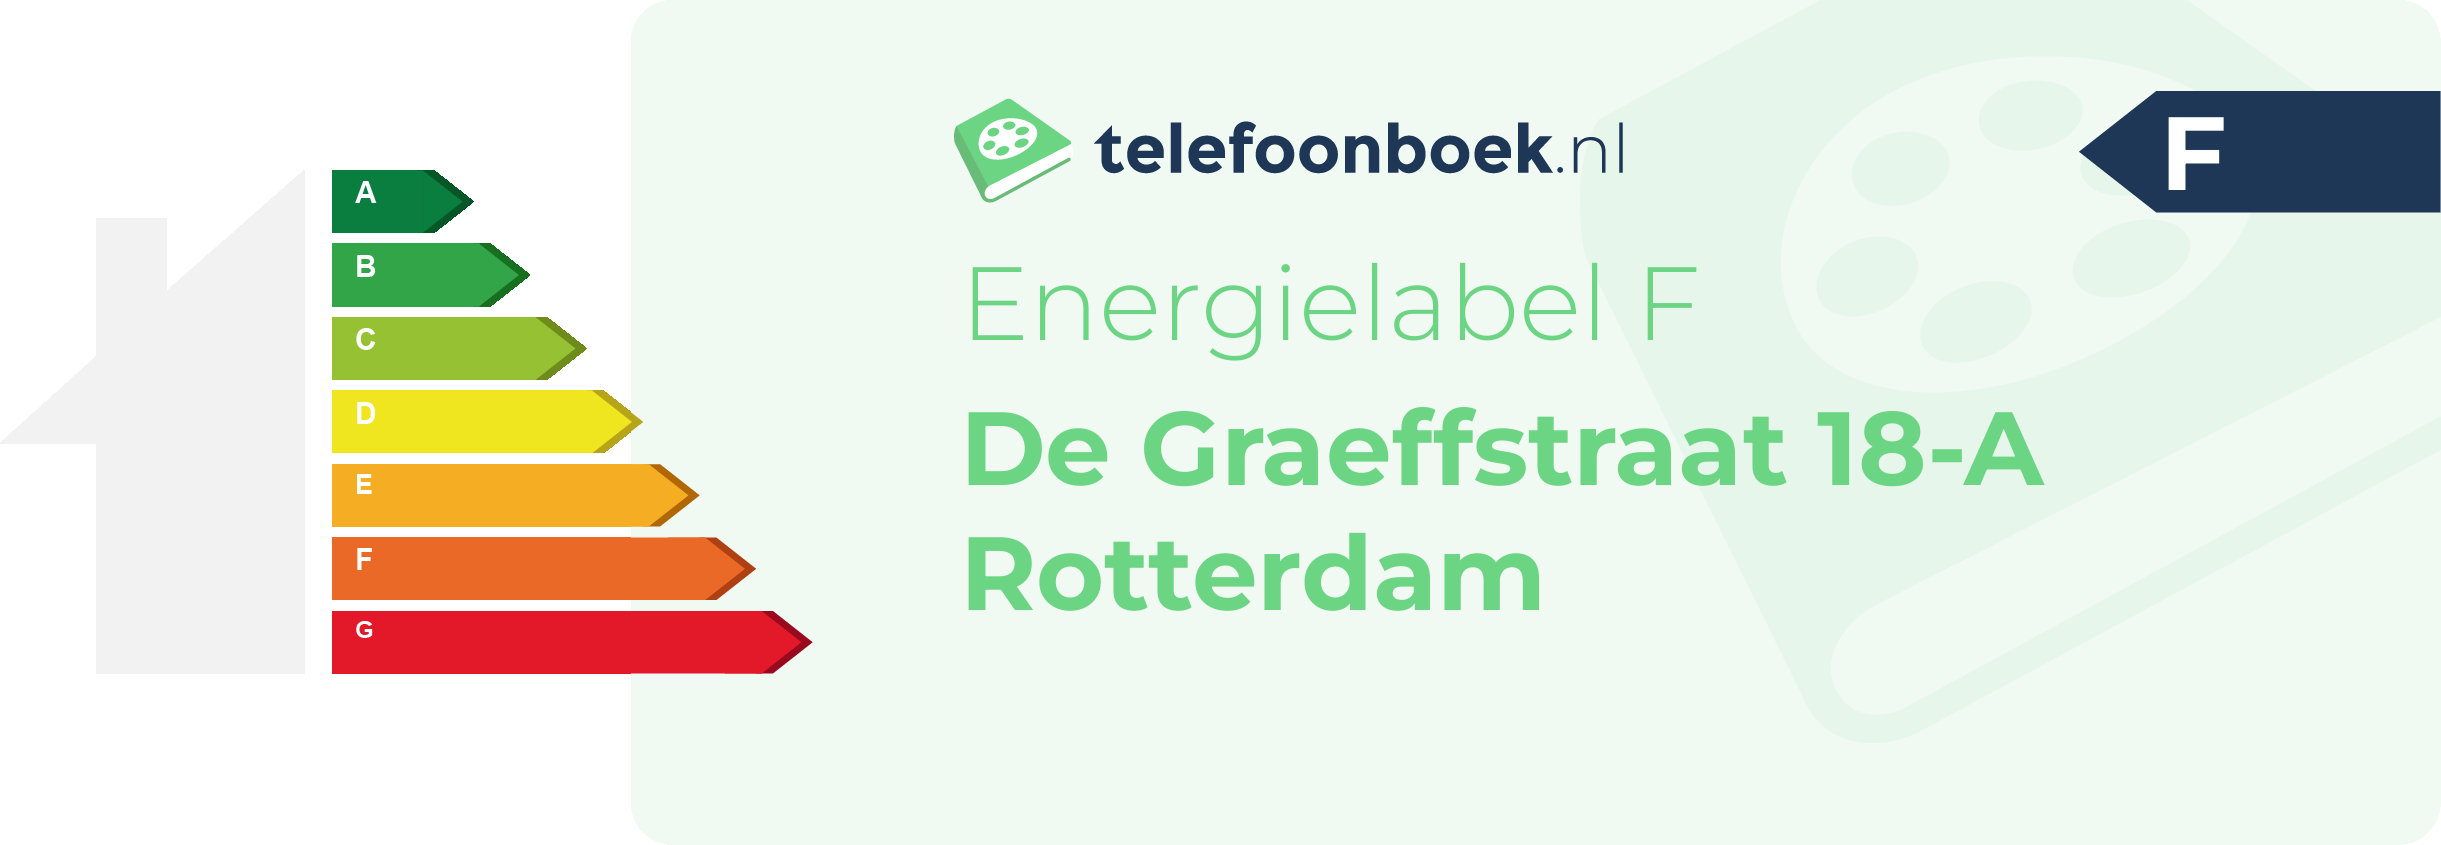 Energielabel De Graeffstraat 18-A Rotterdam